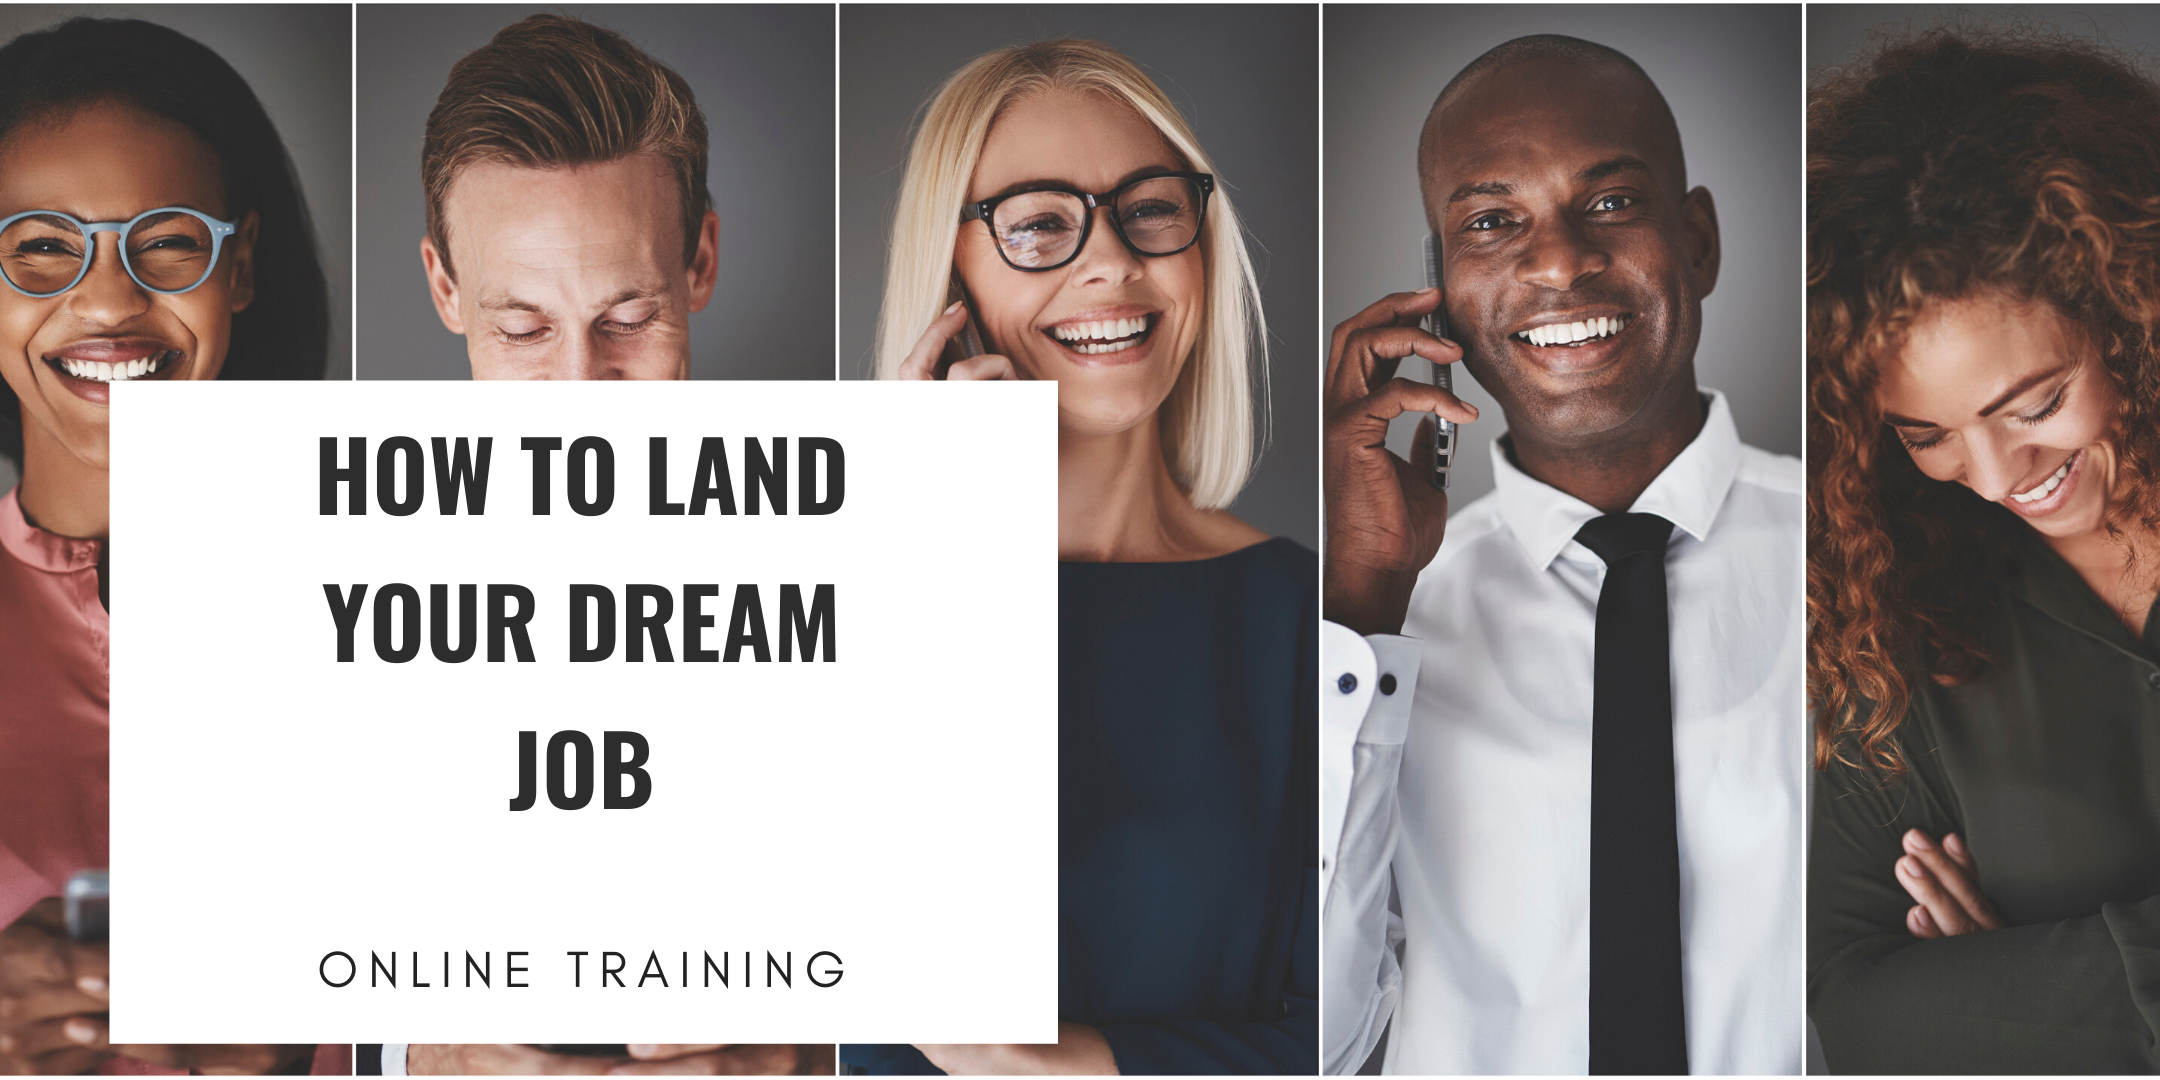 FREE TRAINING: HOW TO LAND YOUR DREAM JOB (CAREER WORKSHOP) San Jose, CA